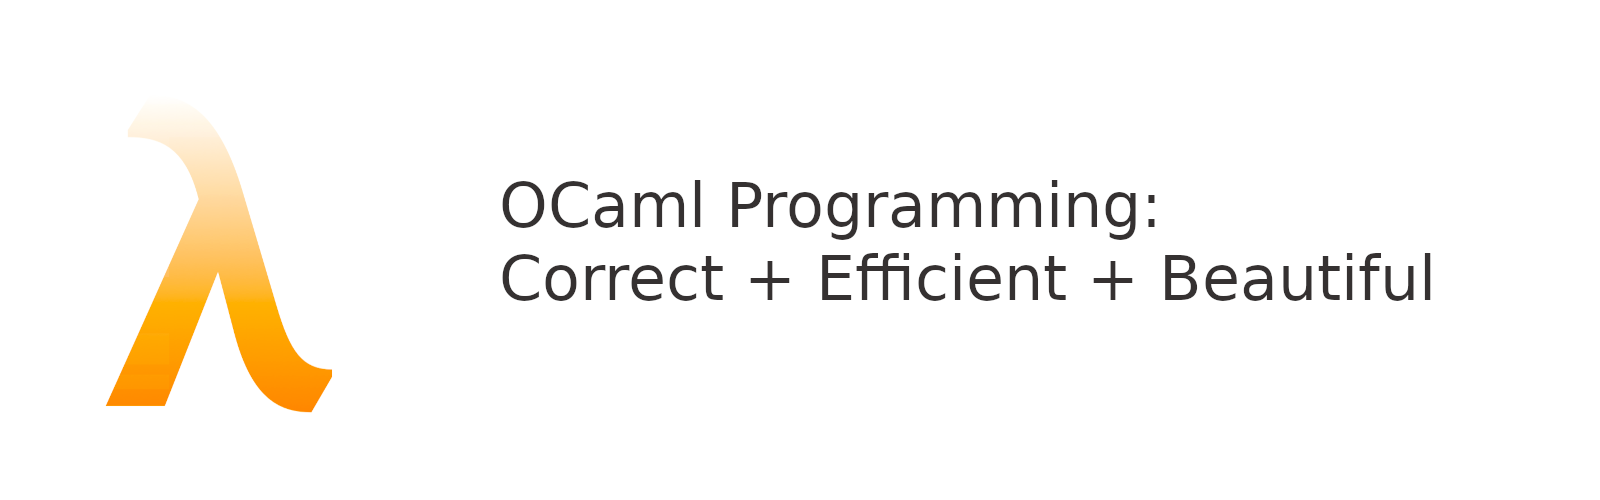 Ocaml Programming: Correct + Efficient + Beautiful